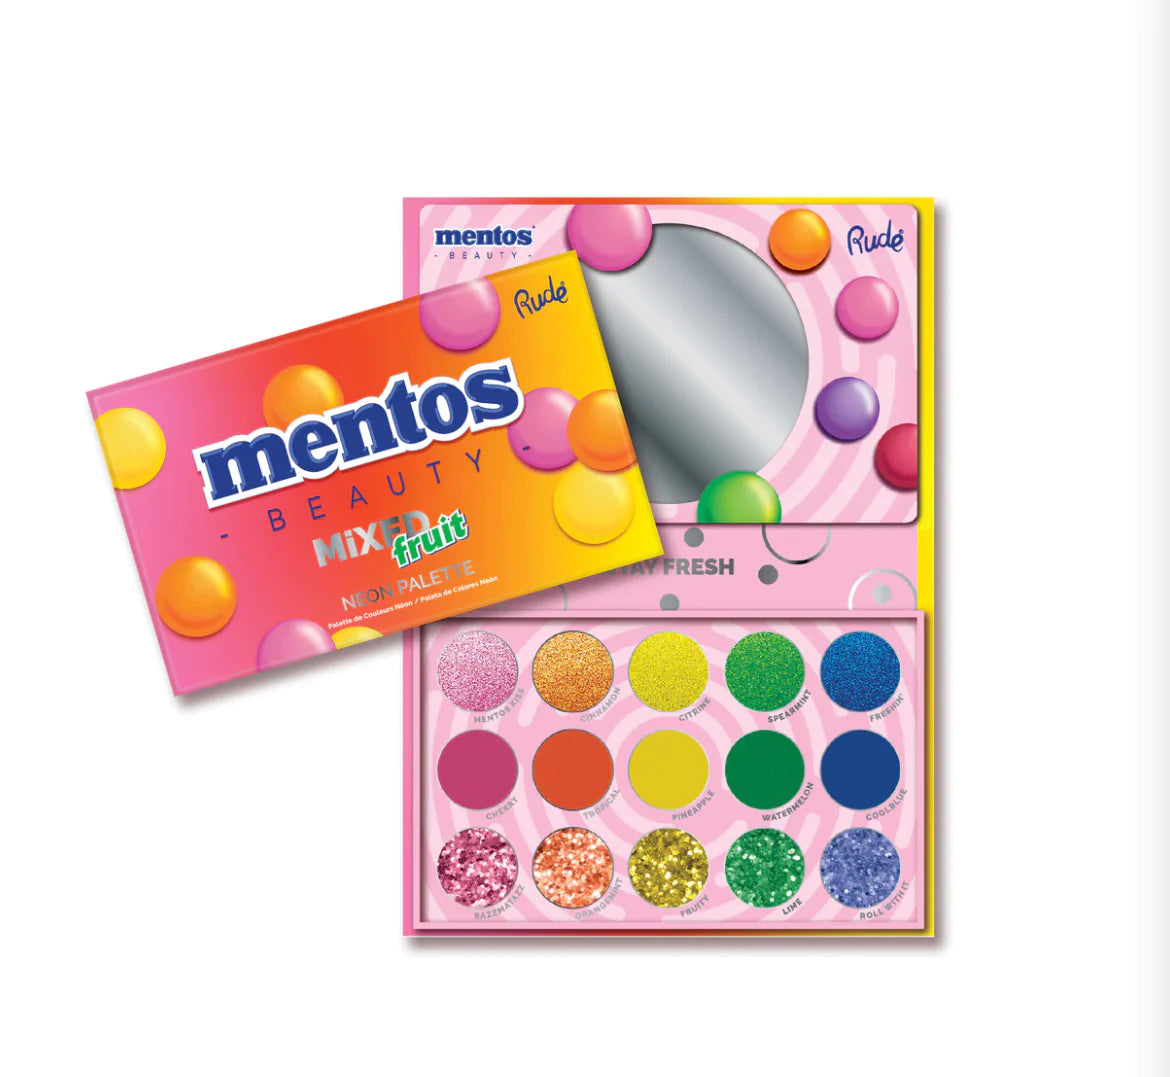 Mentos Mixed Fruit Neon Palette 1pc